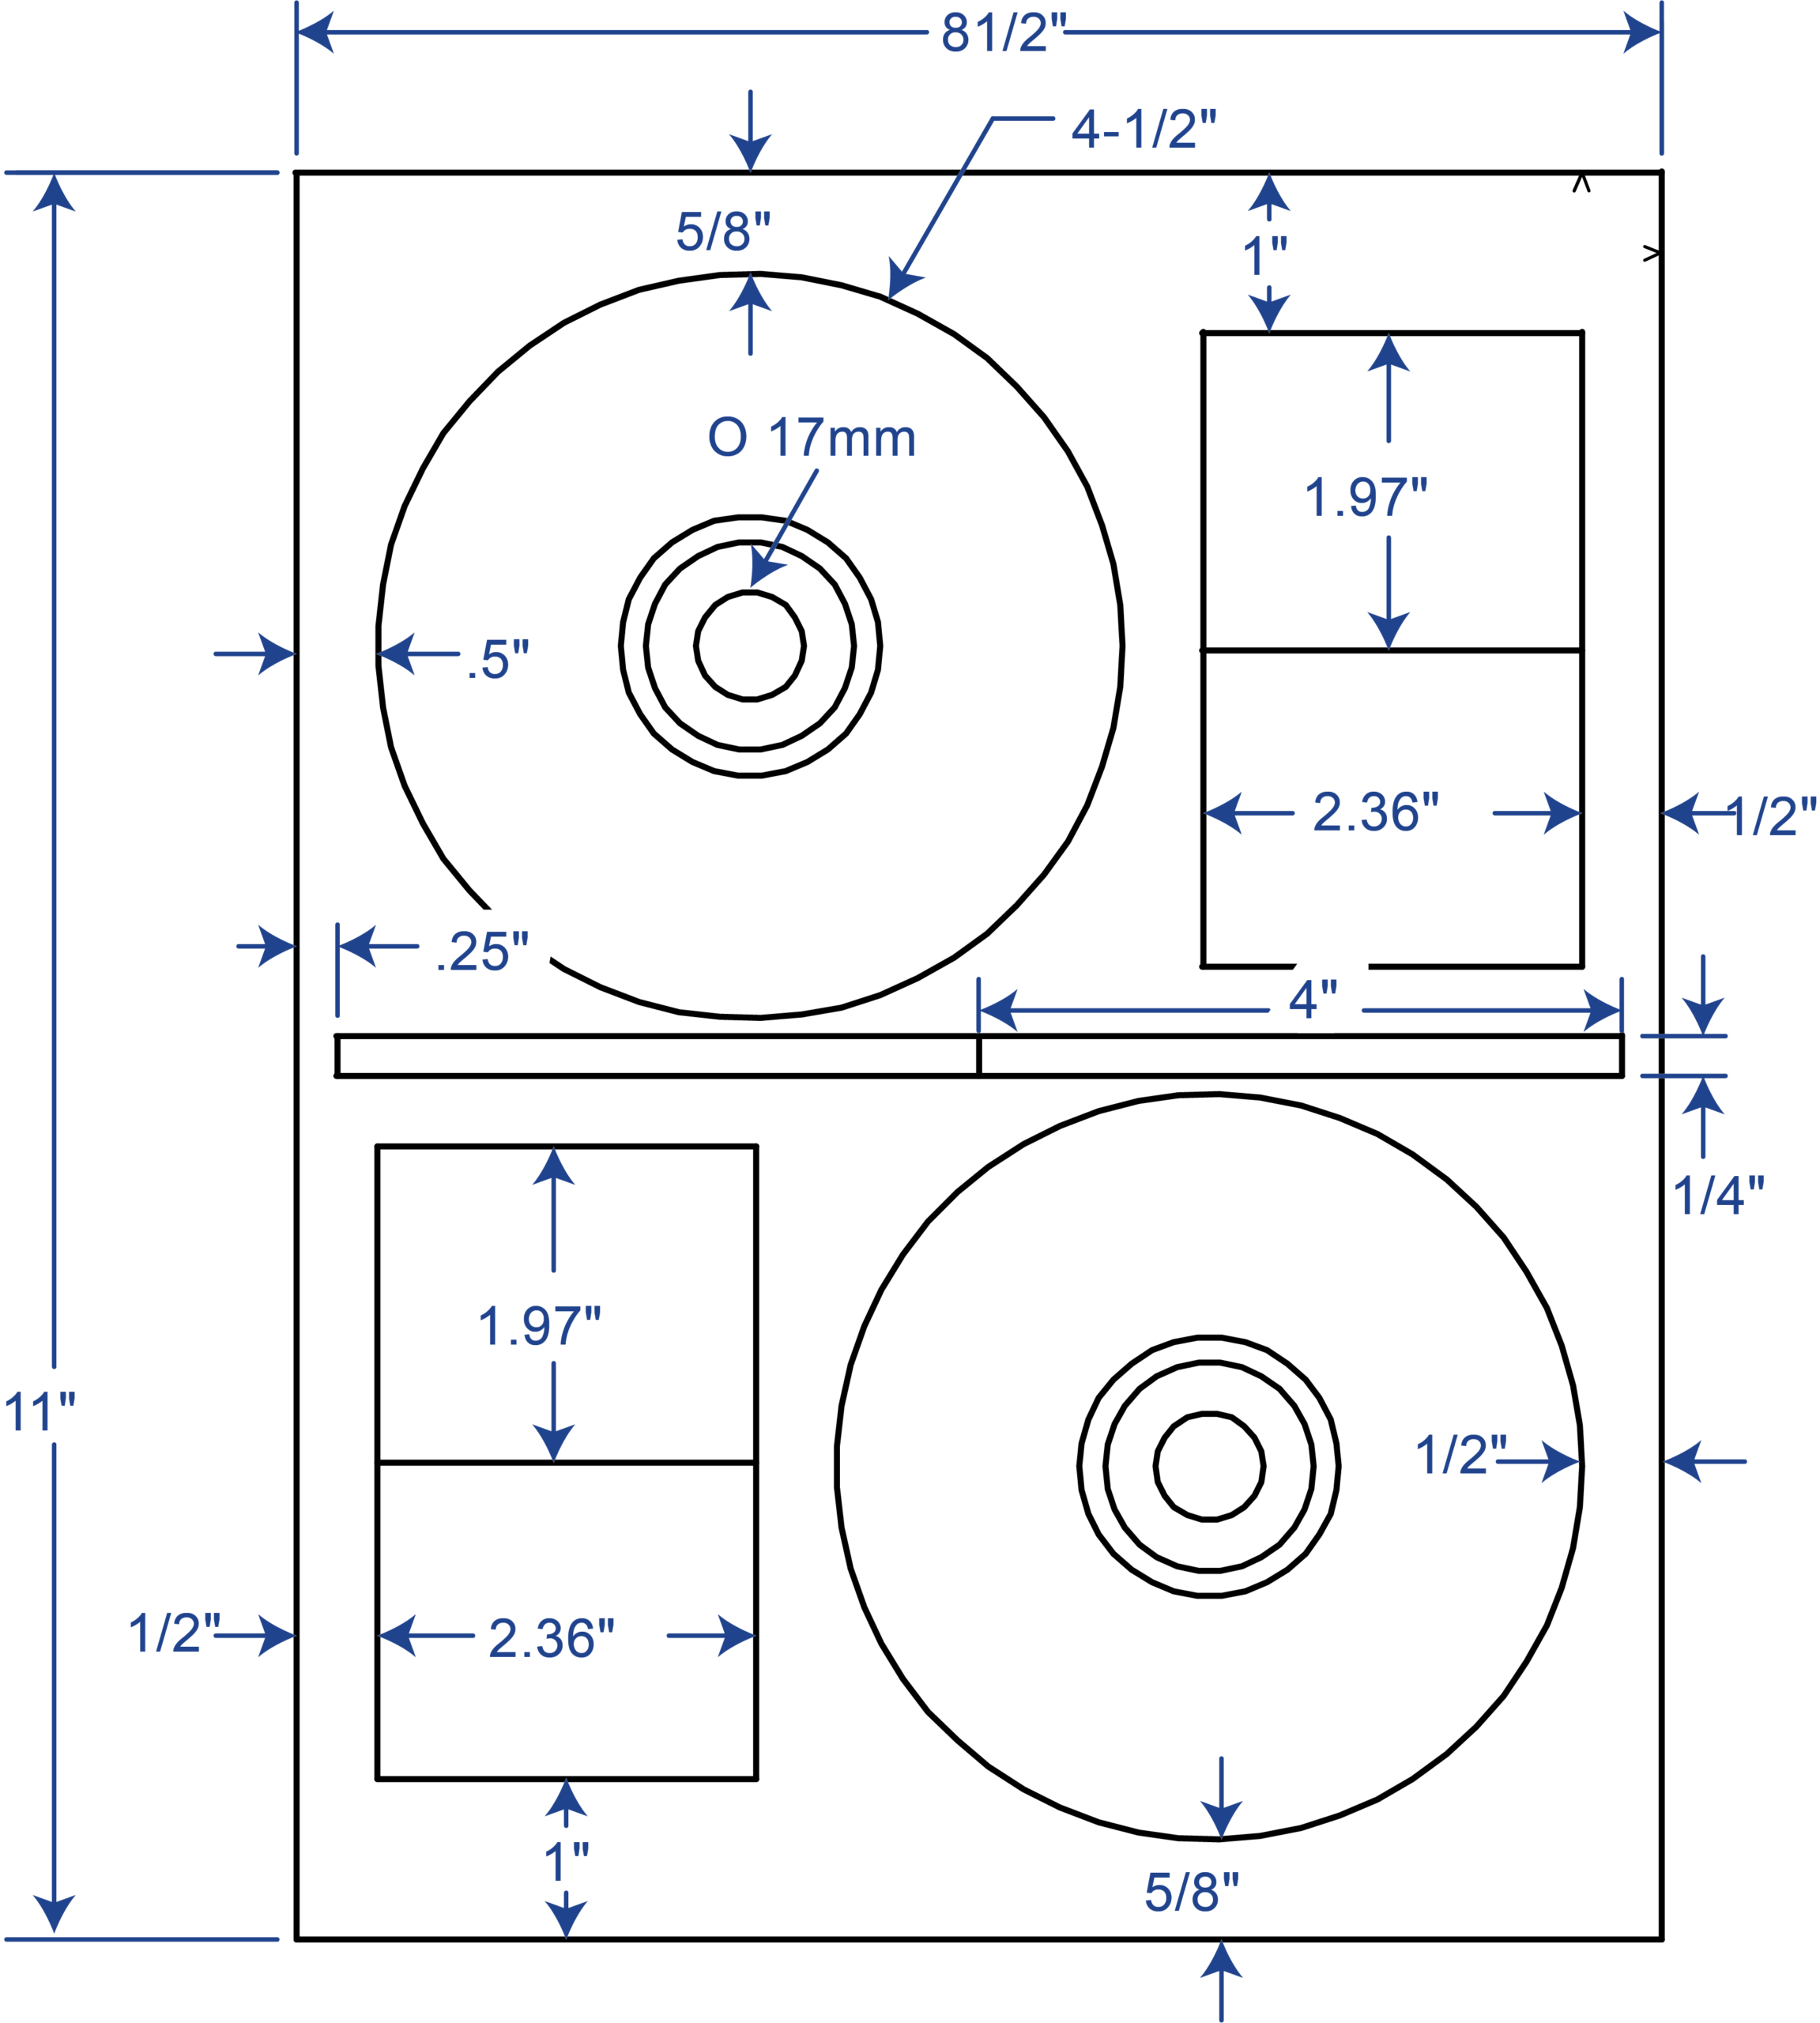 4-5/8" Diameter Laser/Inkjet CD Stomper Pro with Hub Cap Labels